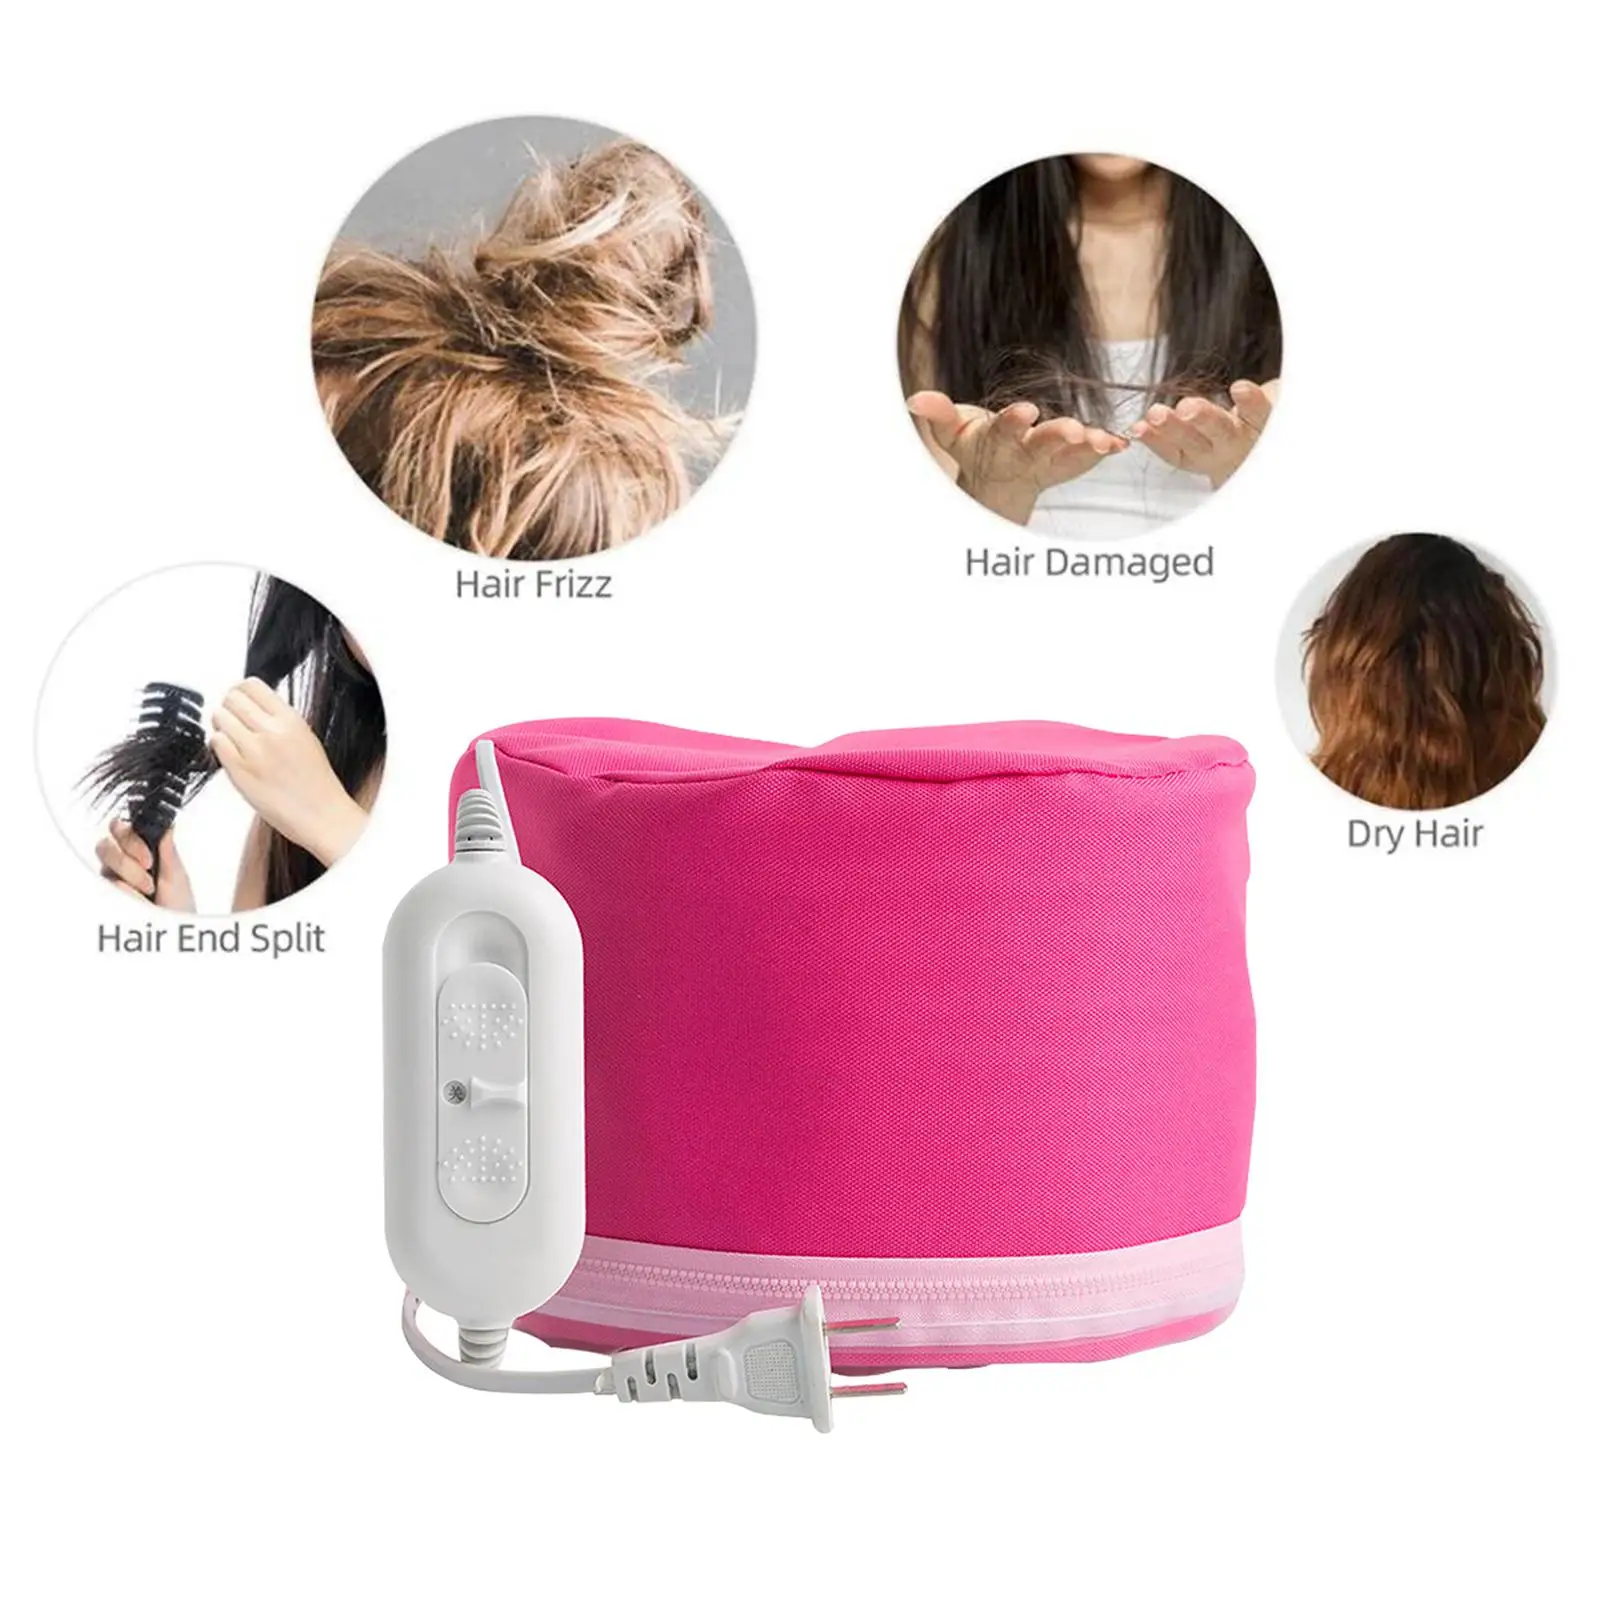 Hair Heating Caps Steamer 3-Mode Adjustable Household Safe Hair Steamer for Deep Conditioning Home Salon Drying Travel Women Men